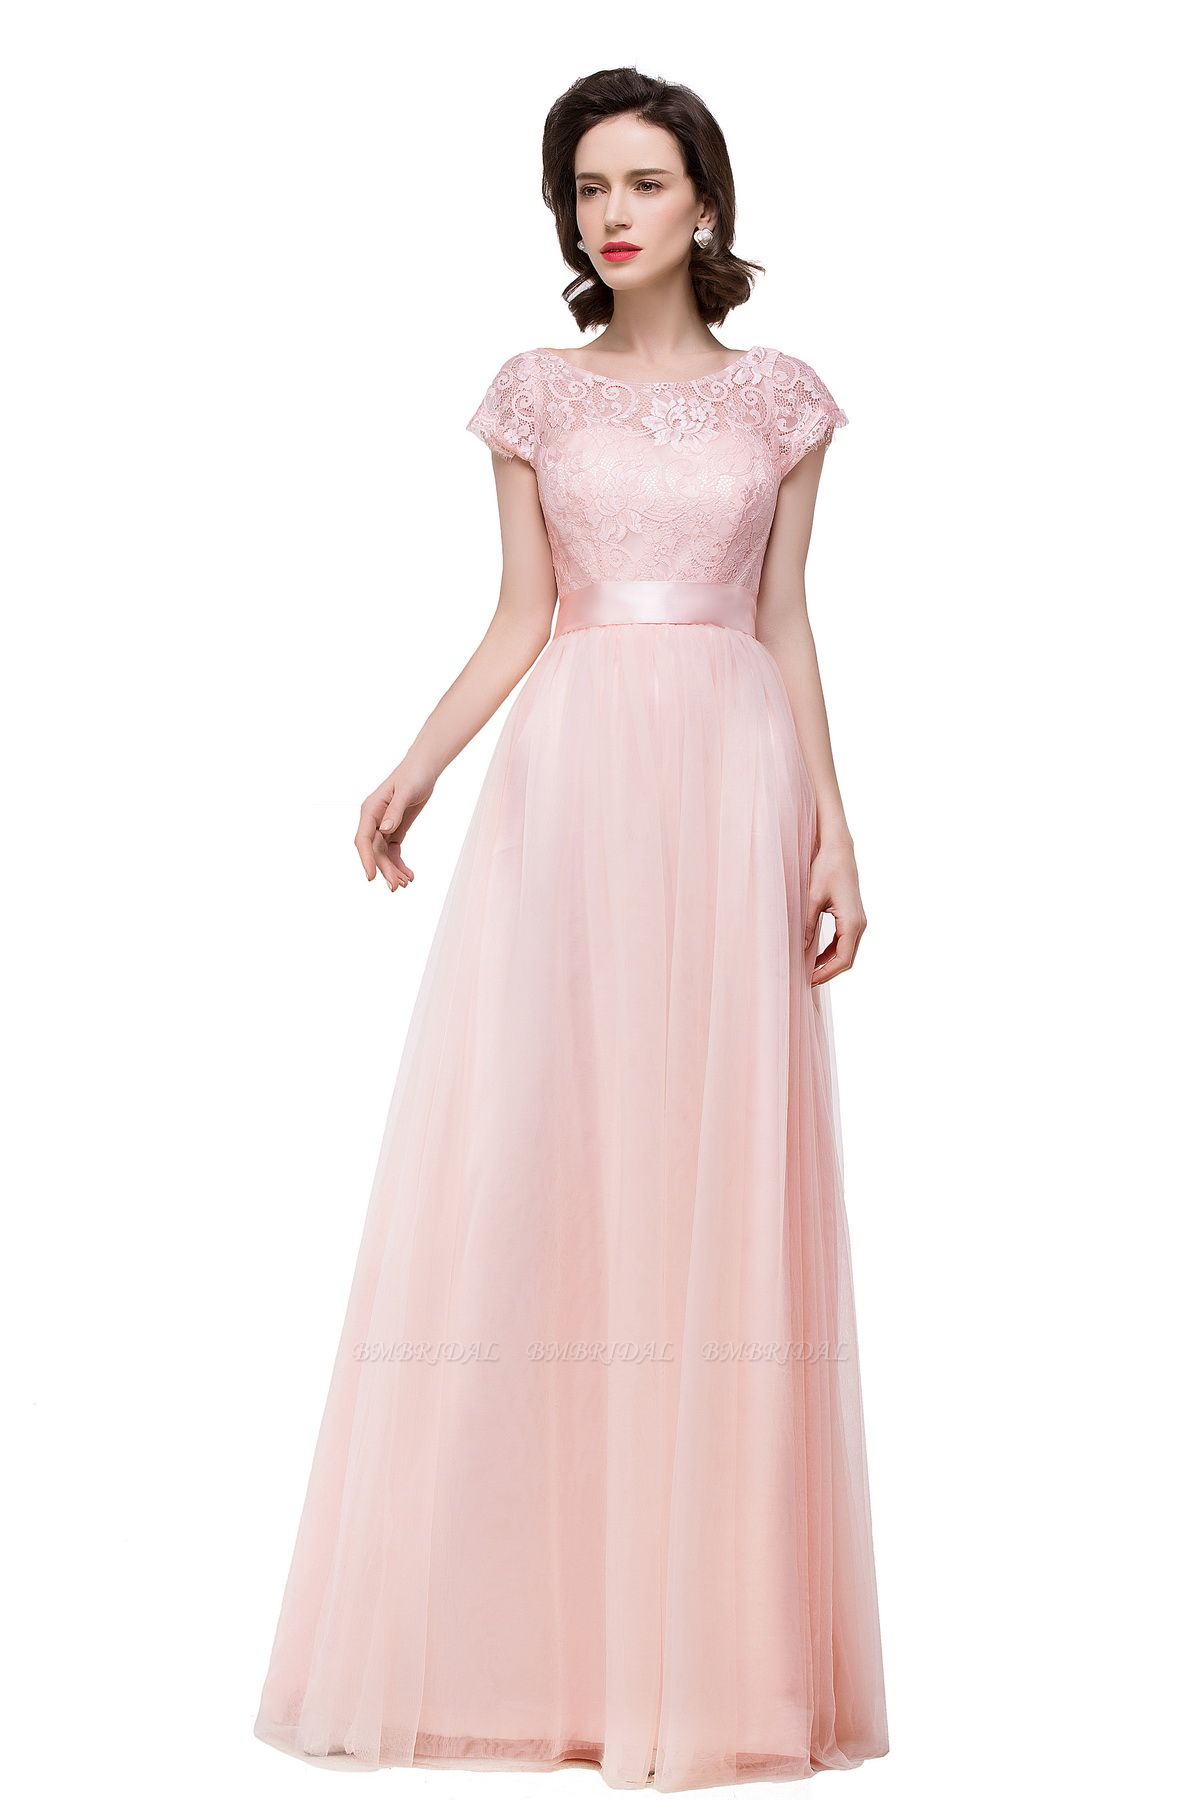 BMbridal Short Sleeve Long Lace Bridesmaid Dresses